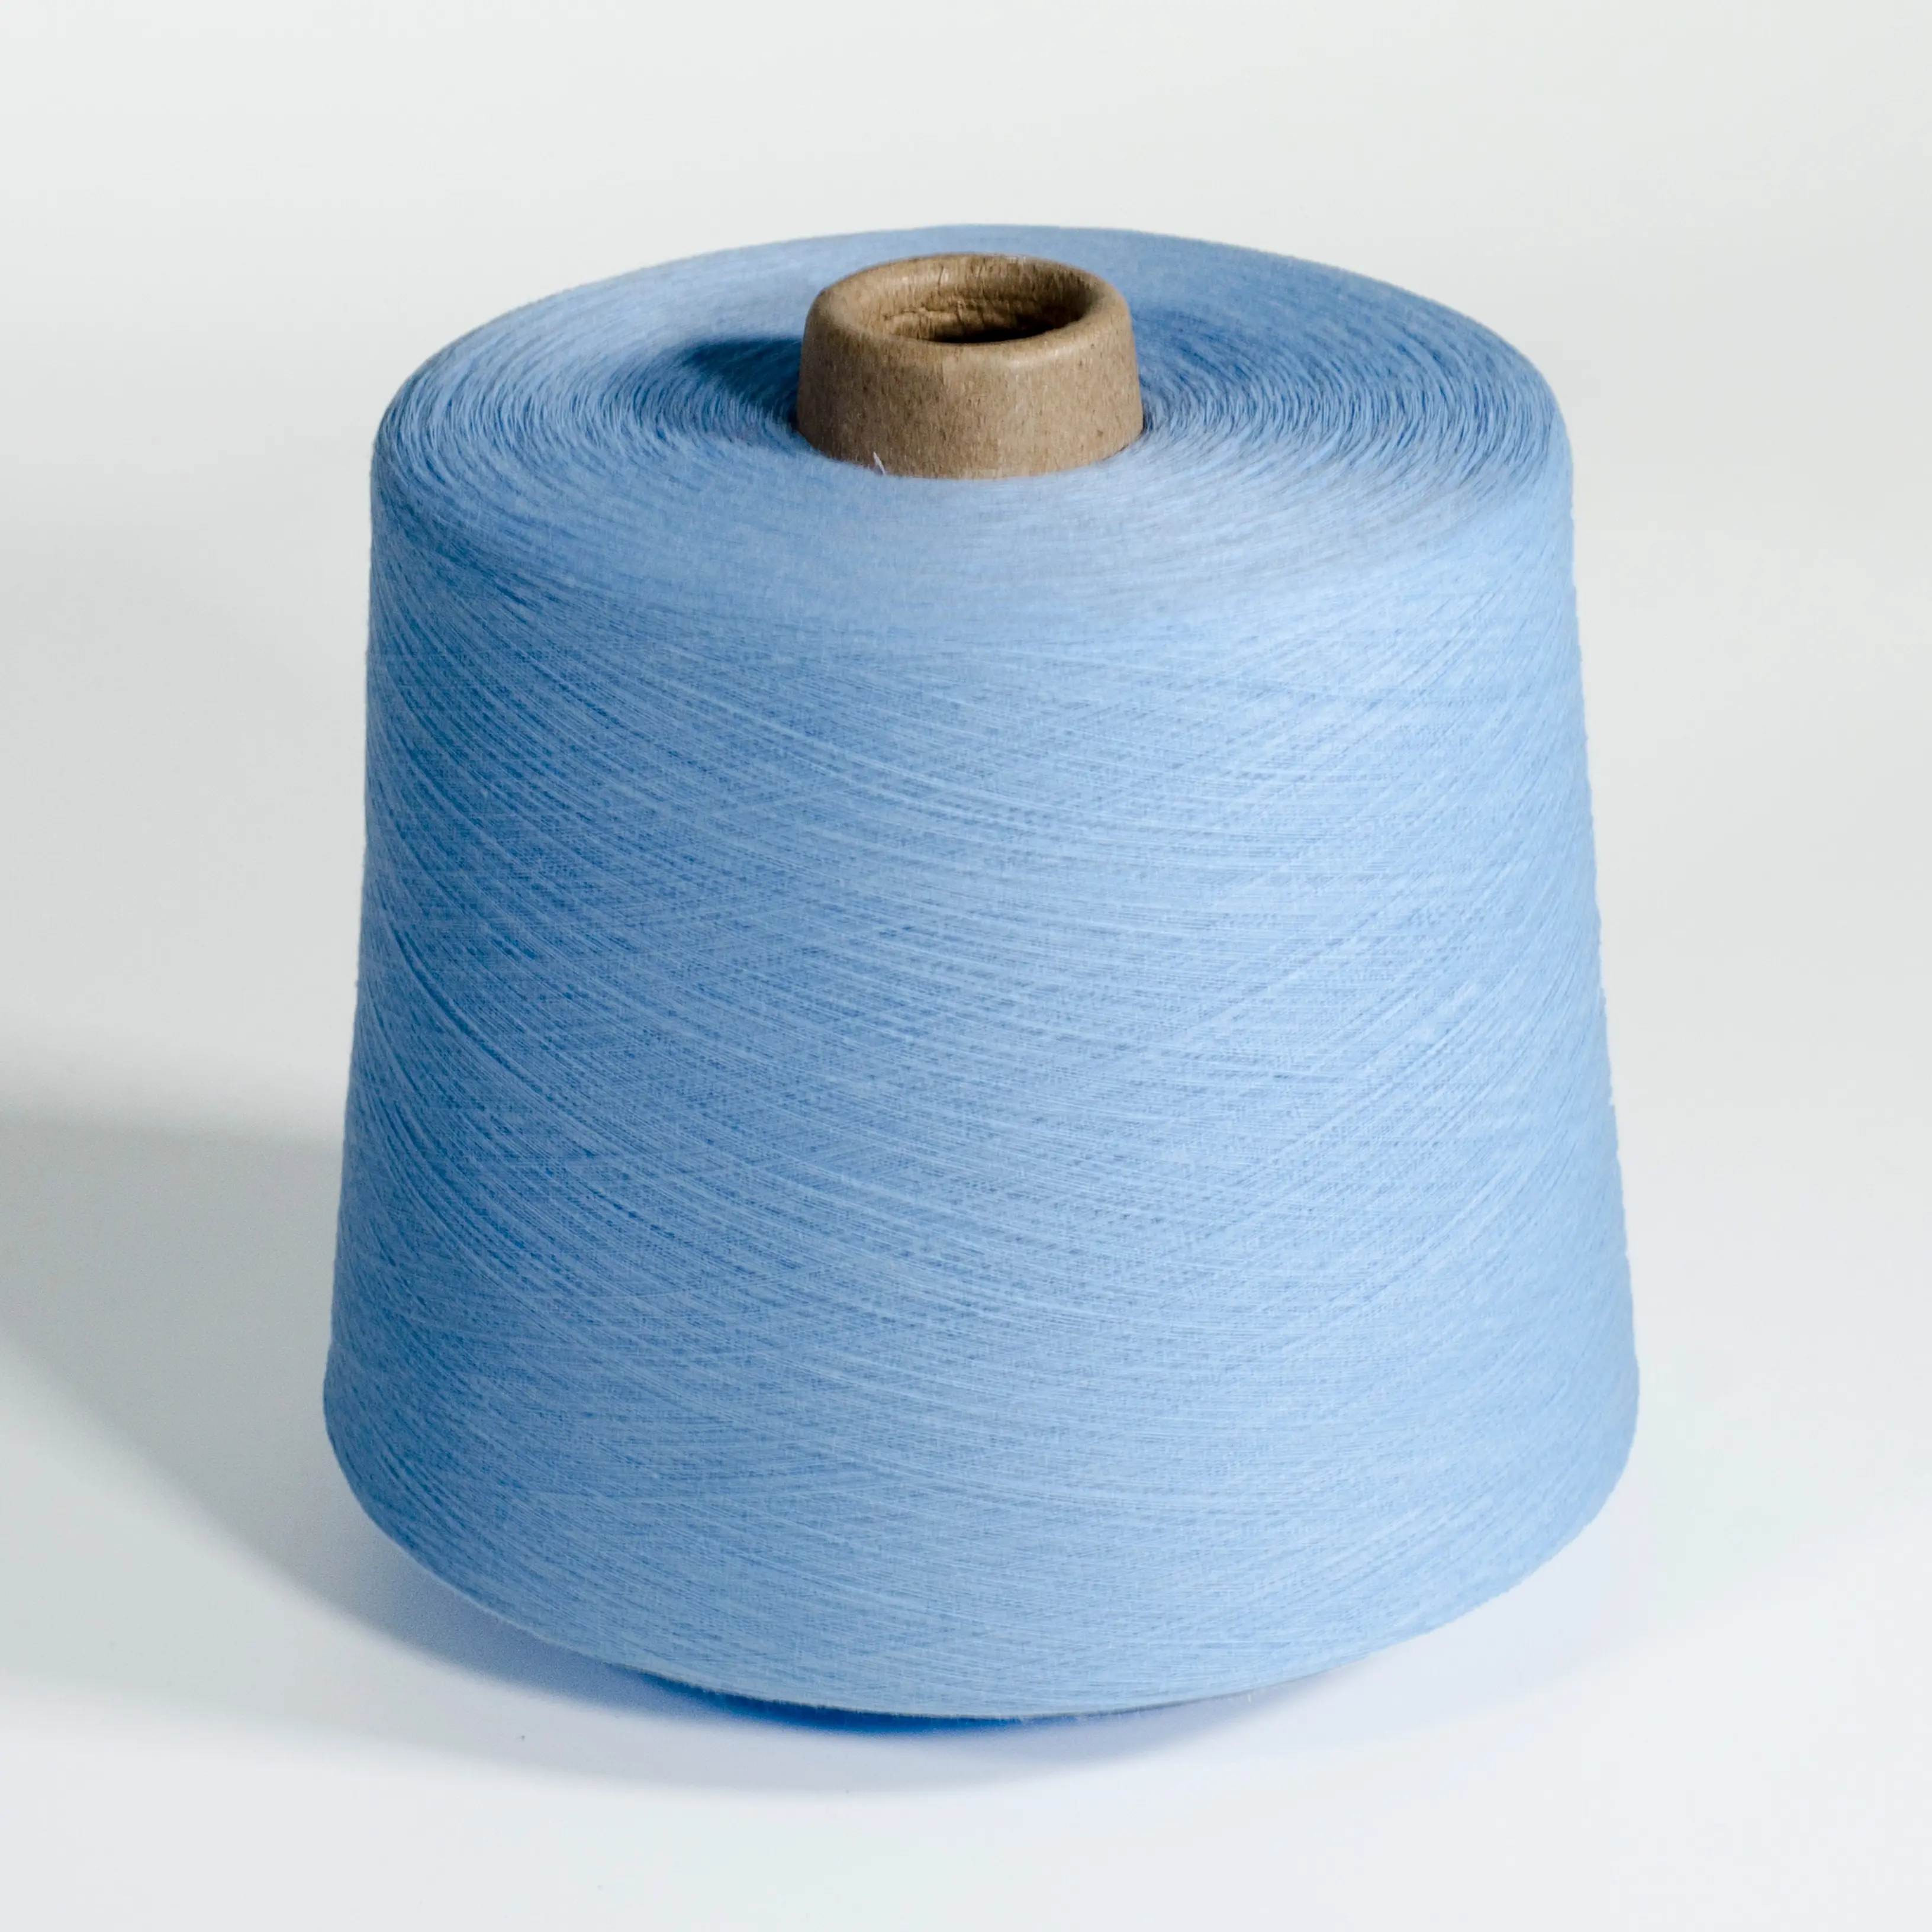 Wholesale dyed 40 combed cotton yarn price 100% cotton yarn turkey socks weaving